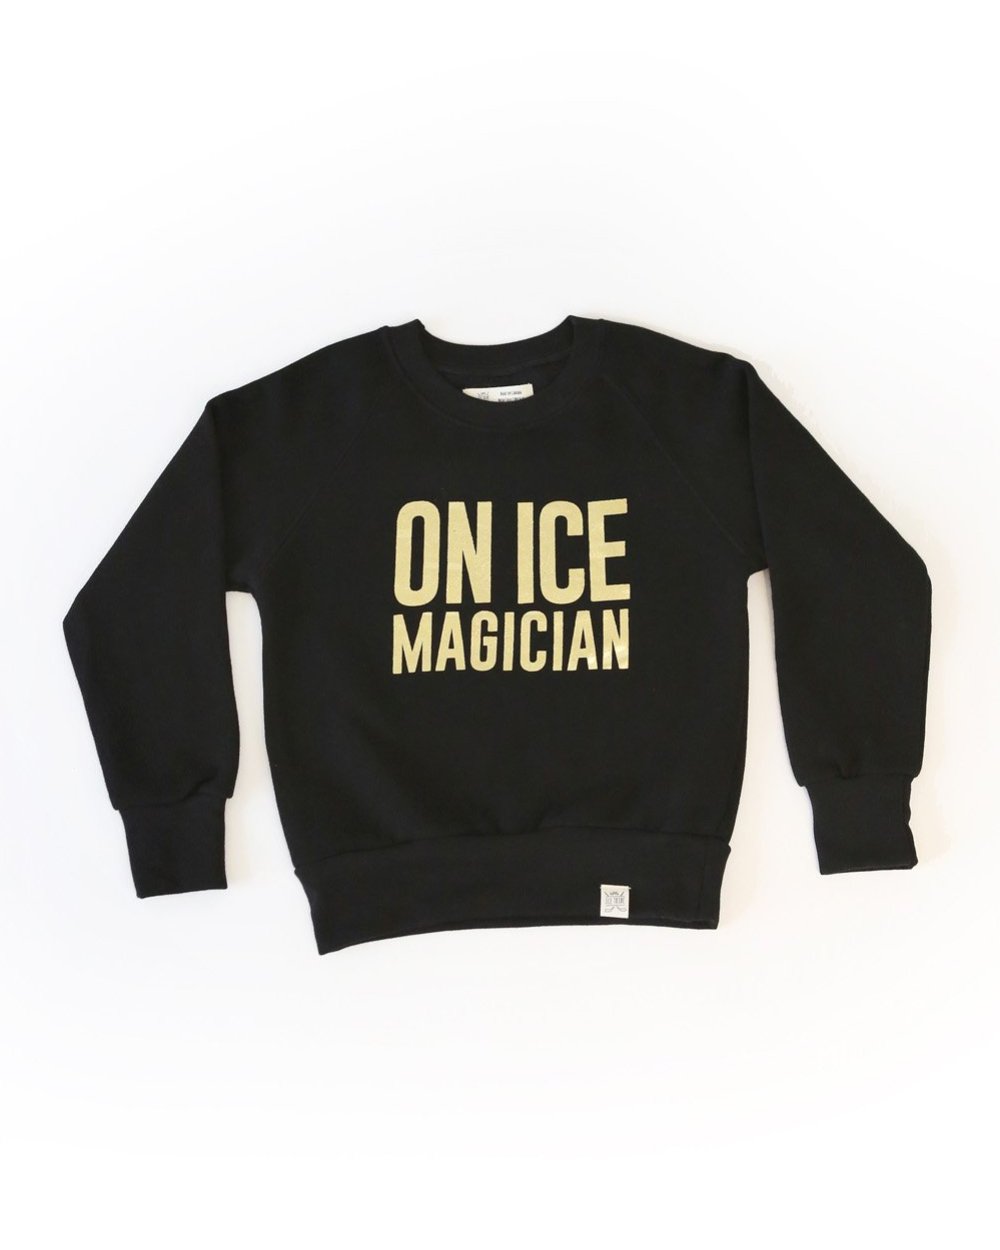 On Ice Magician Youth Sweatshirt